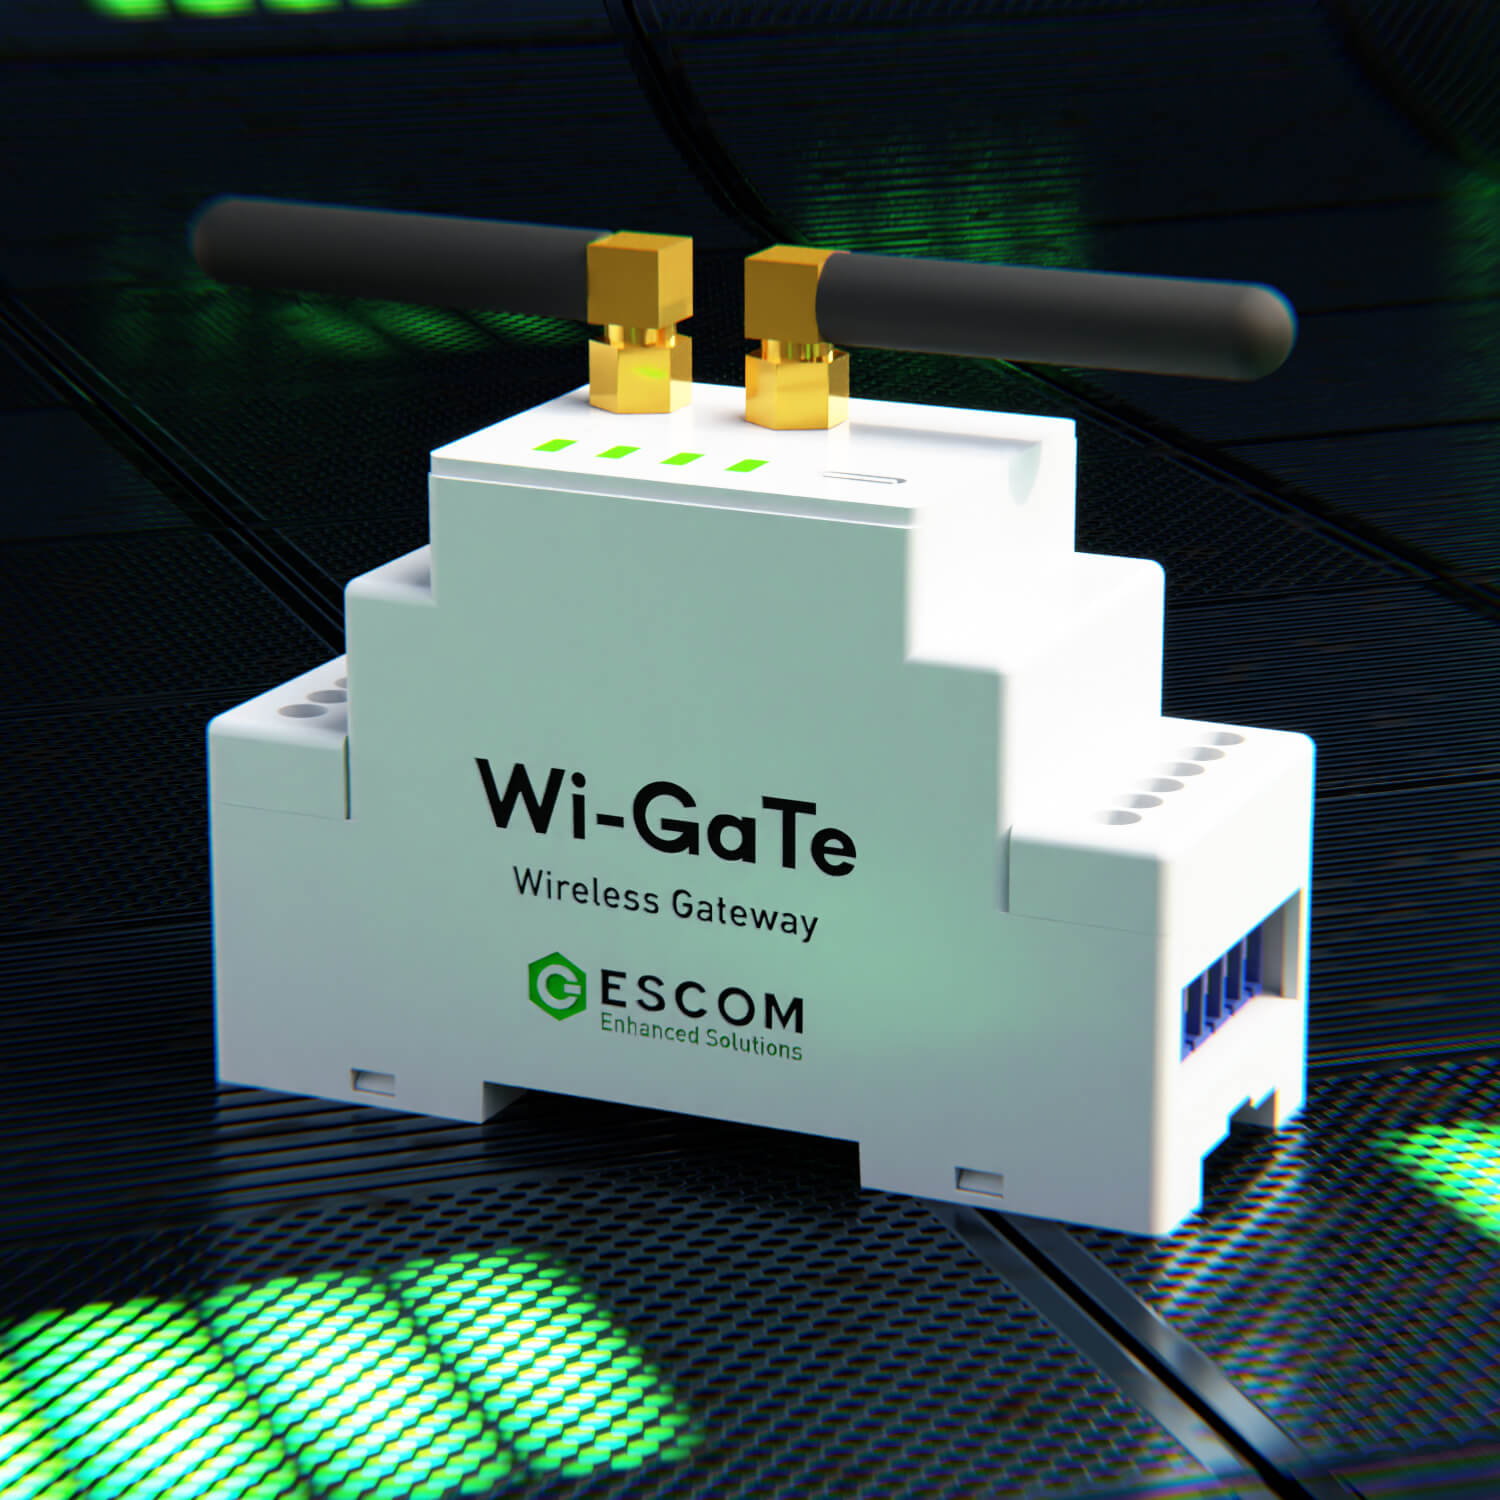 Wireless Gate
